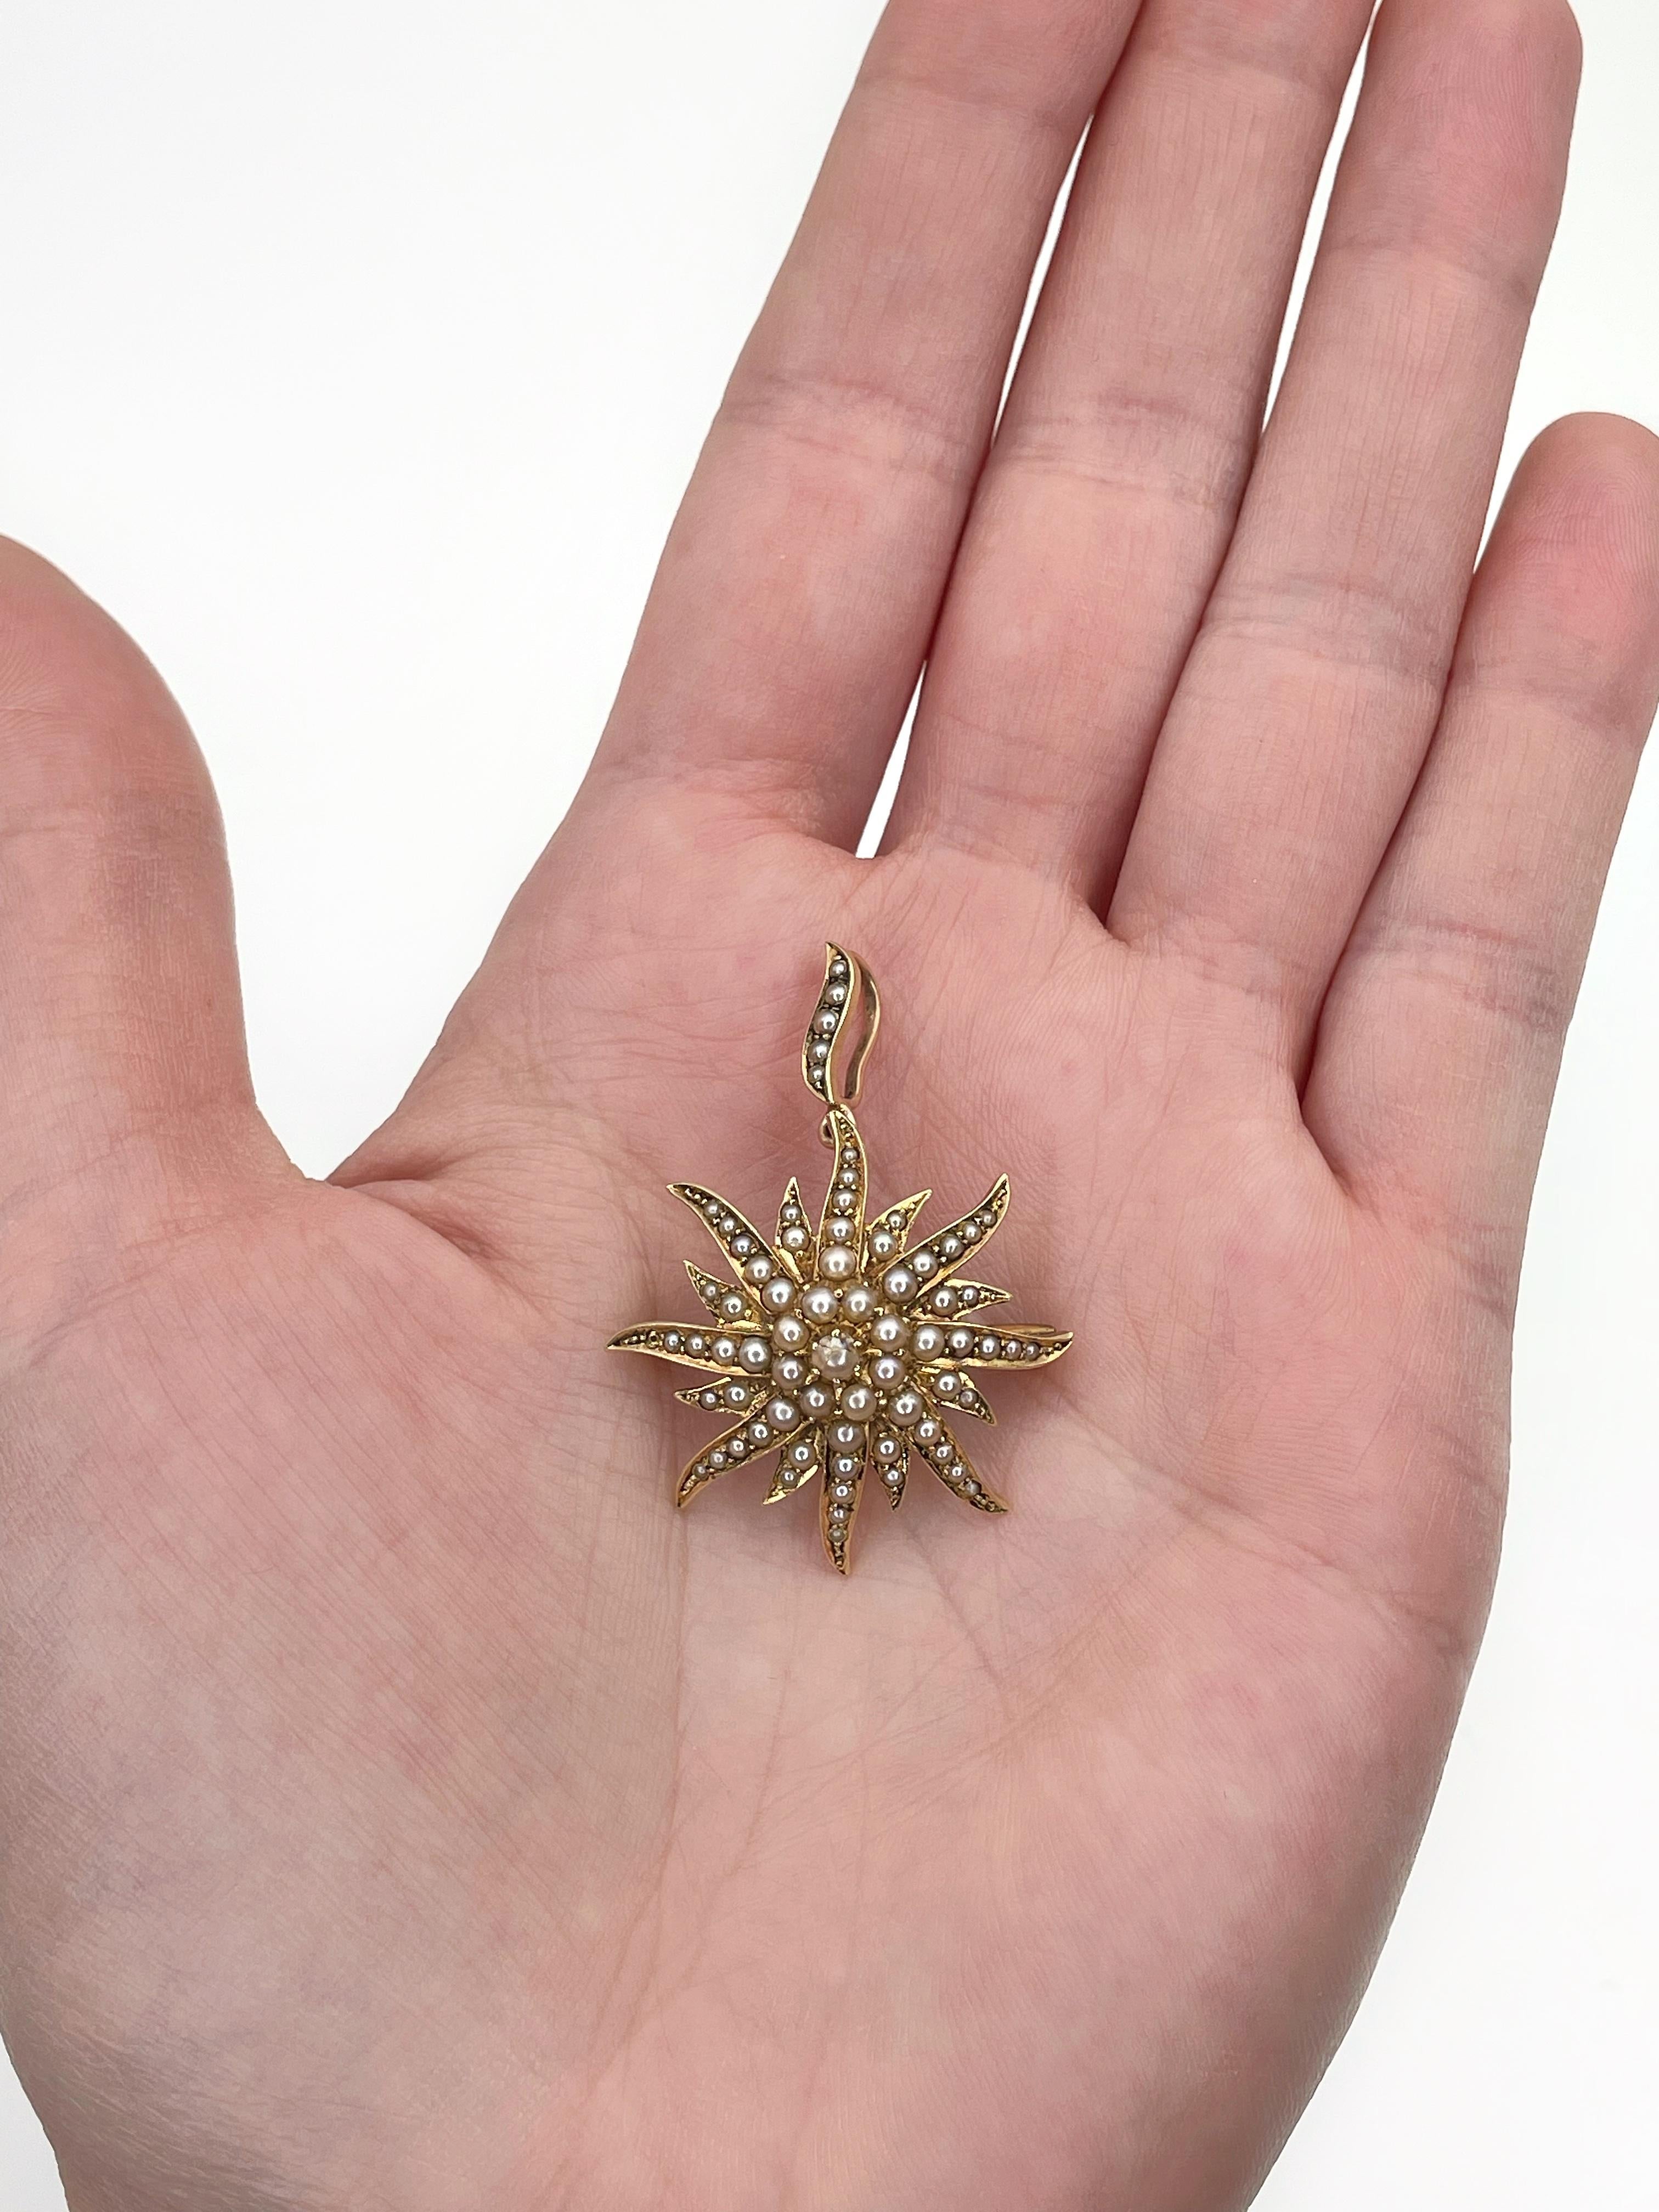 Antique Victorian 15K Gold Seed Pearl Starburst Pendant Brooch 3